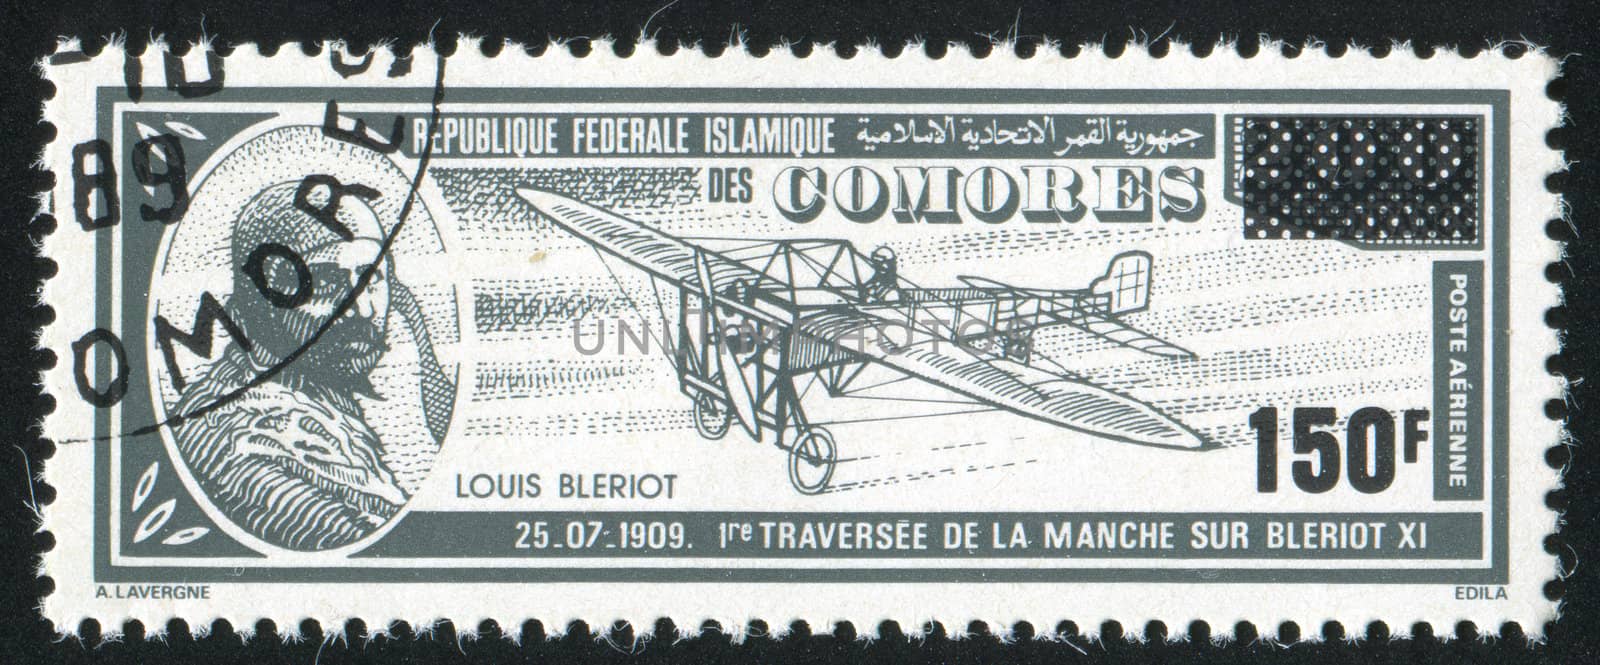 COMORO ISLANDS - CIRCA 1988: stamp printed by Comoro islands, shows airplane and Louis Bleriot, circa 1988